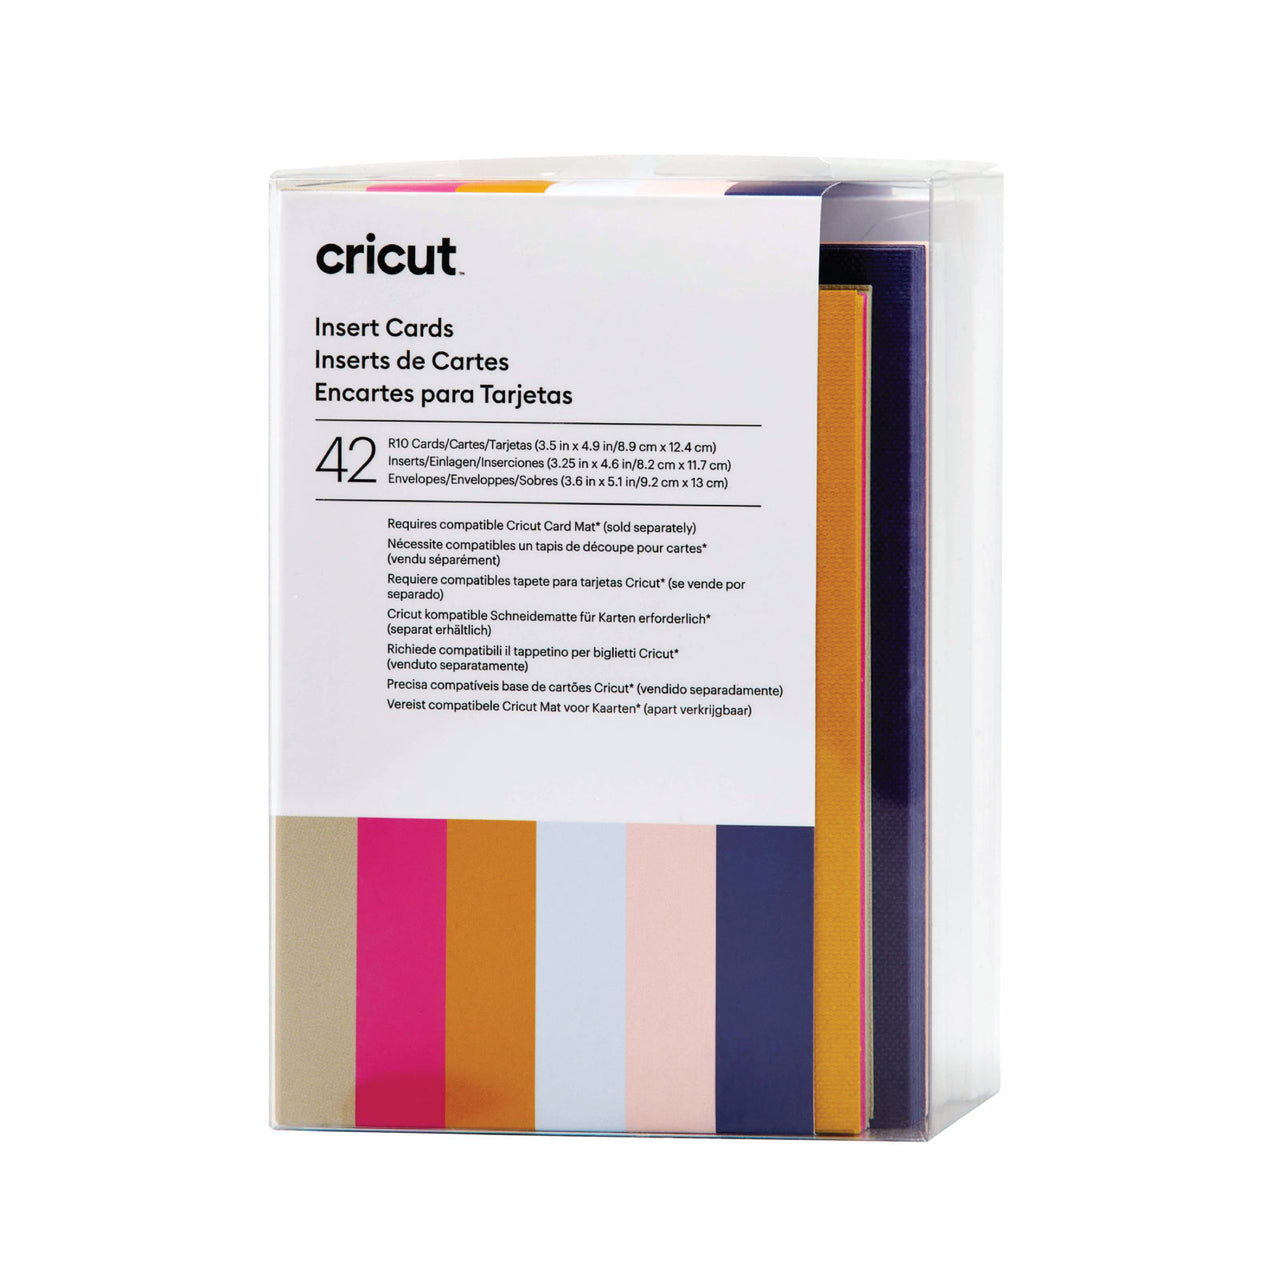 Cricut Insert Cards, Sensei Sampler - R10 42 ct - Damaged Package